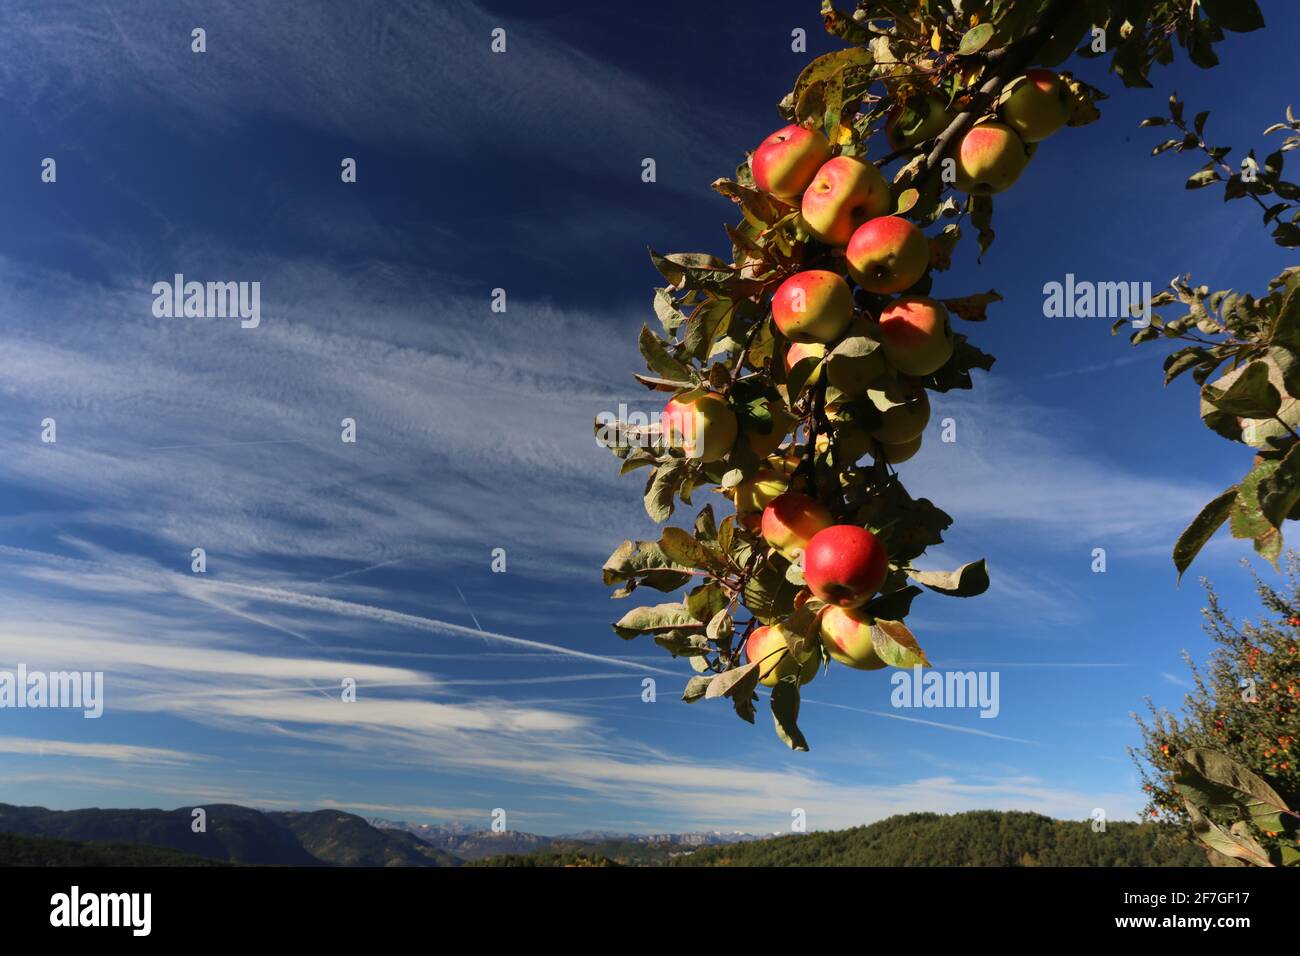 Herbstlicher Ast mit roten reifen Äpfeln gegen blauen Himmel in den Dolomitas in Südtirol, Italien Foto de stock